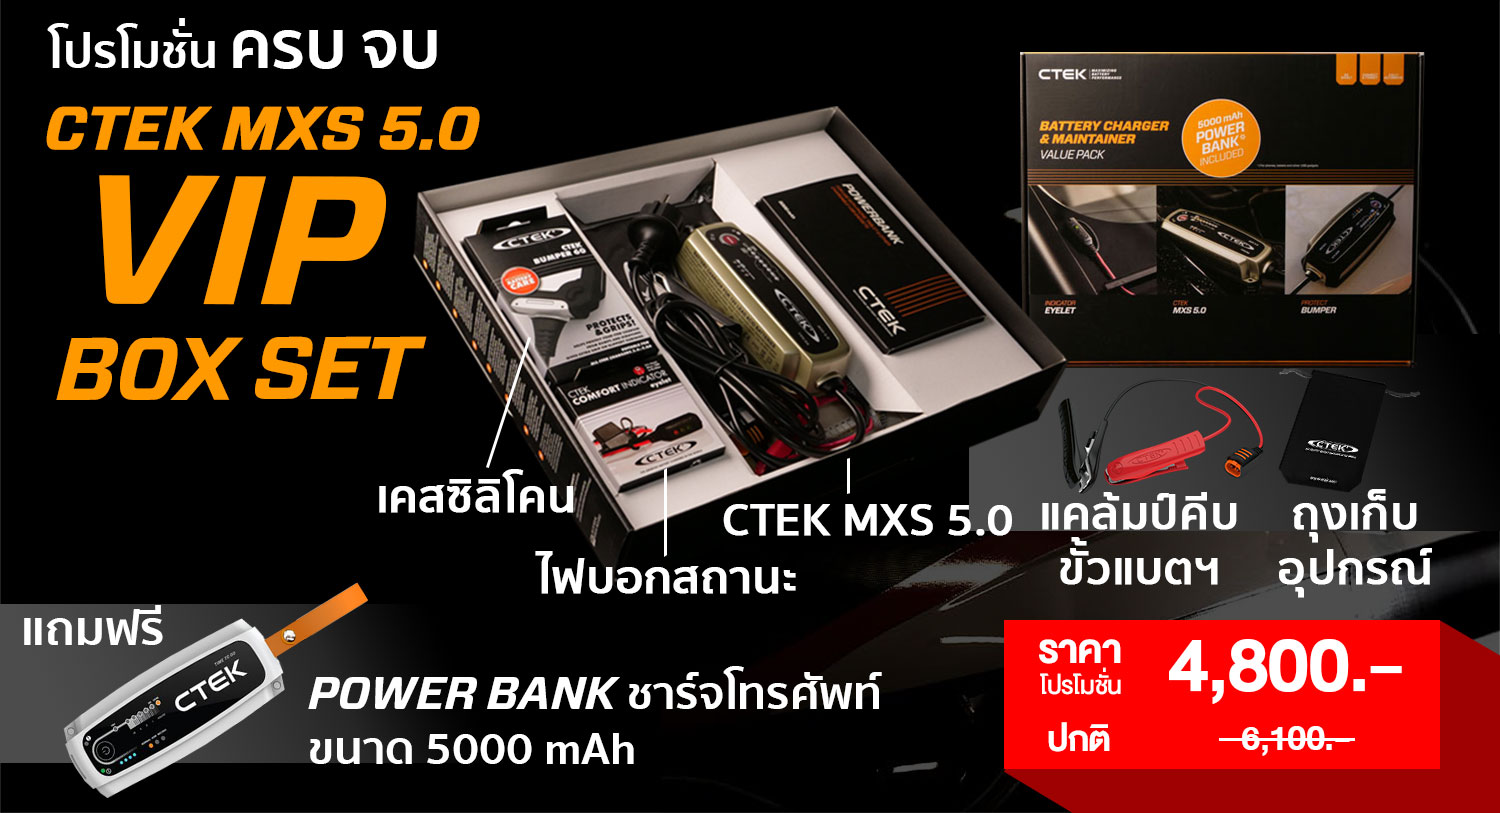 CTEK MXS 5.0 VIP BOX SET เครื่องชาร์จแบตเตอรี่รถยนต์อละมอเตอร์ไซค์